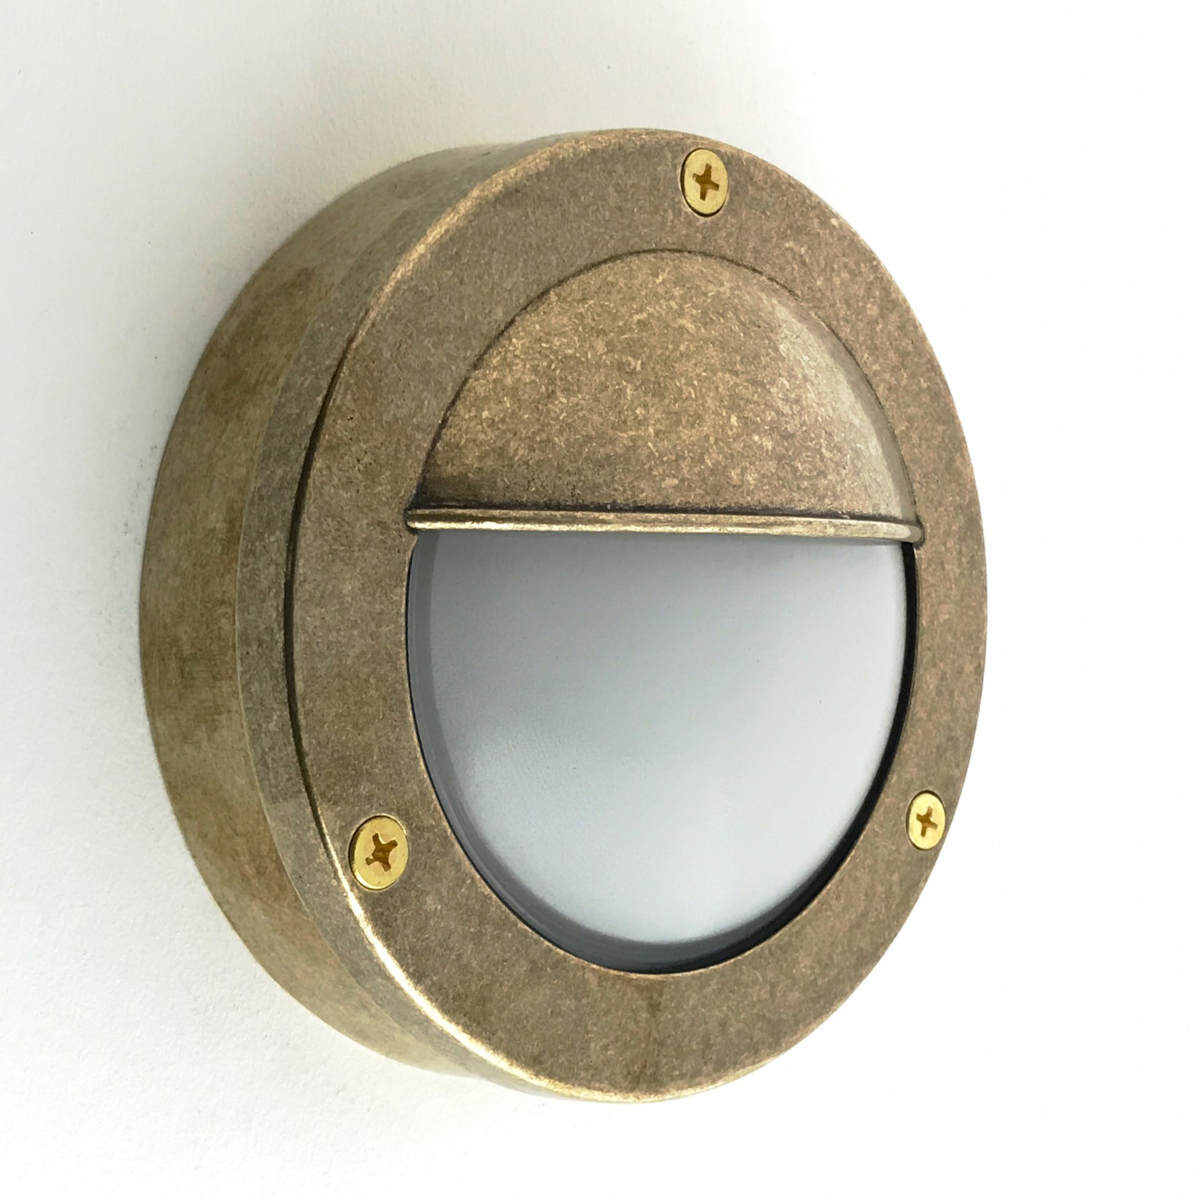 Bull's eye brass wall light with lid glass